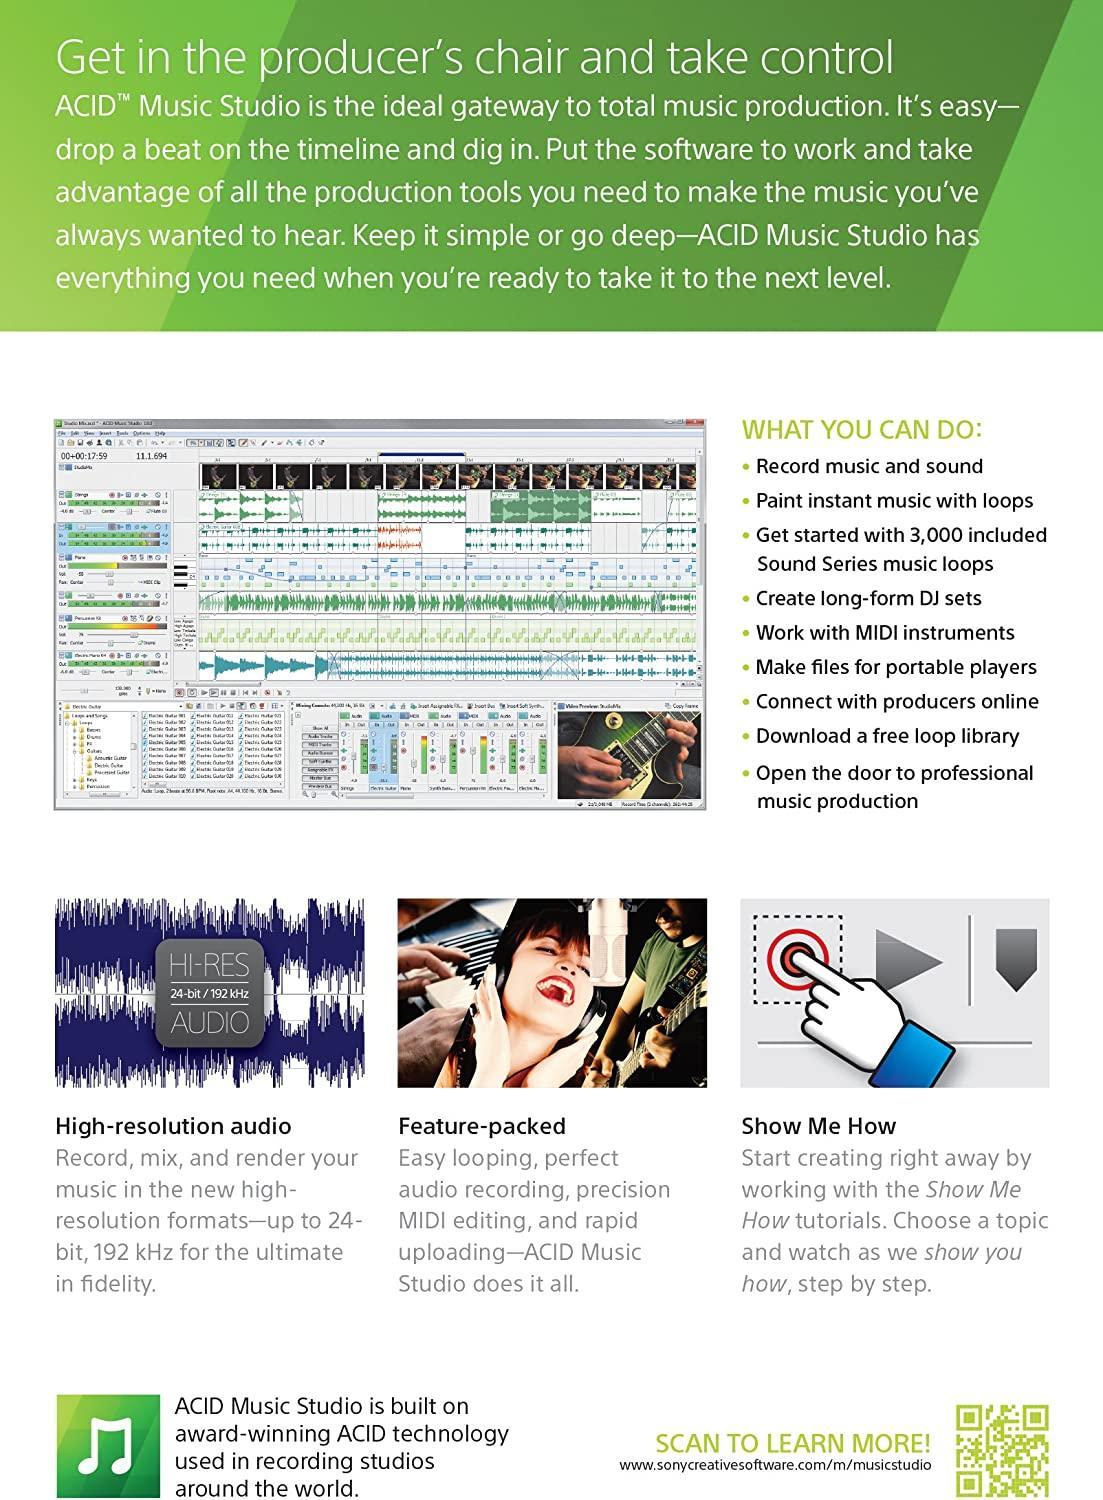 Magix Acid Music Studio 10 - Instant Download for Windows (1 Computer) - SoftwareCW - Authorized Reseller